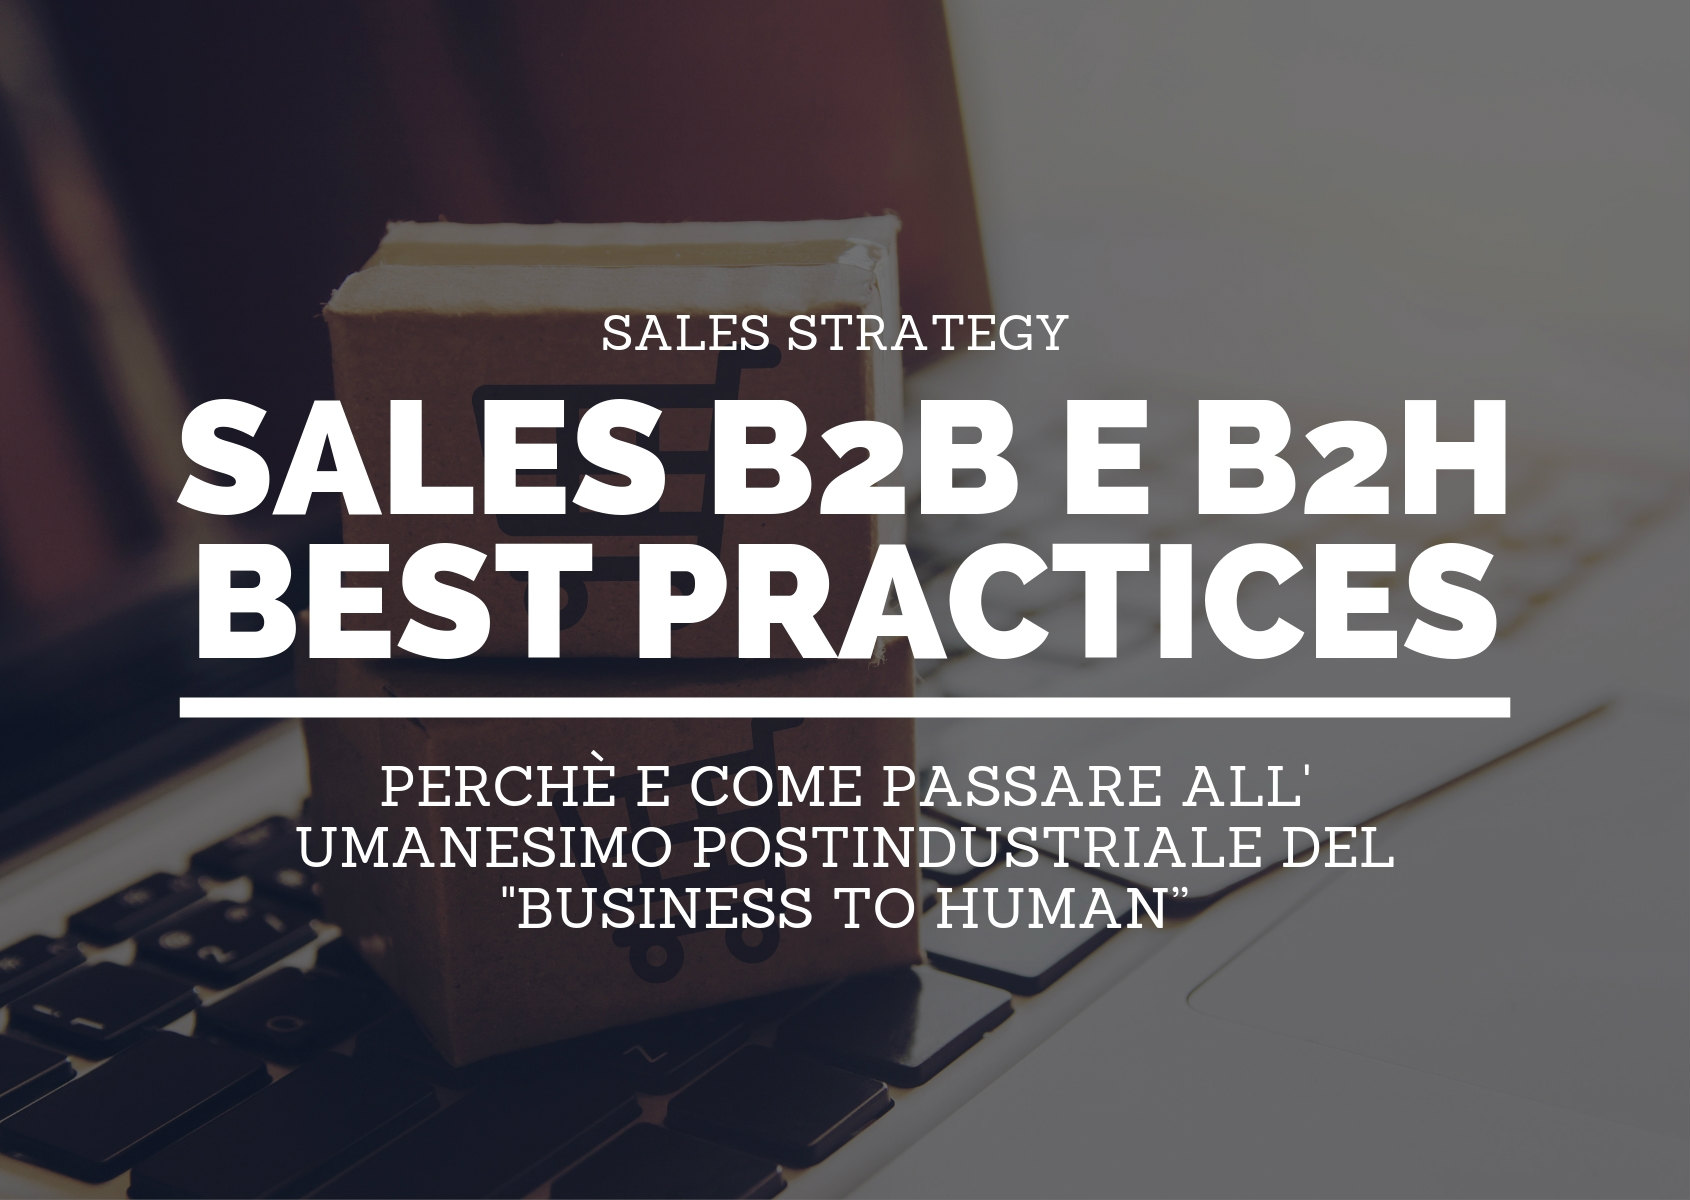 Sales B2B e B2H: tutte le best practices aggiornate